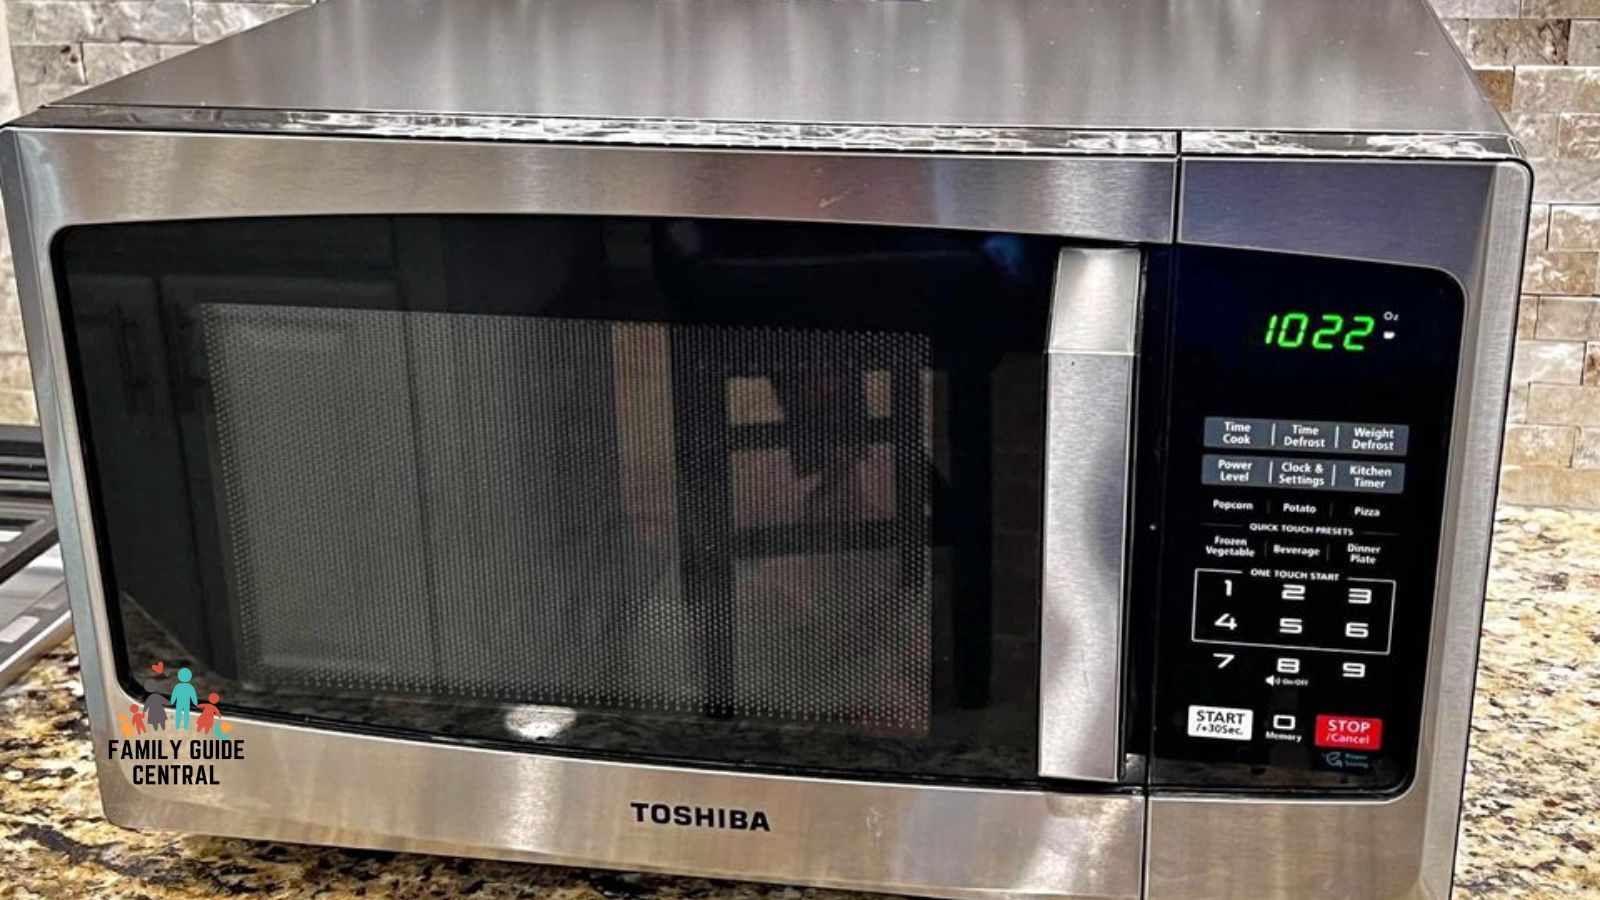 Toshiba brand microwave - familyguidecentral.com